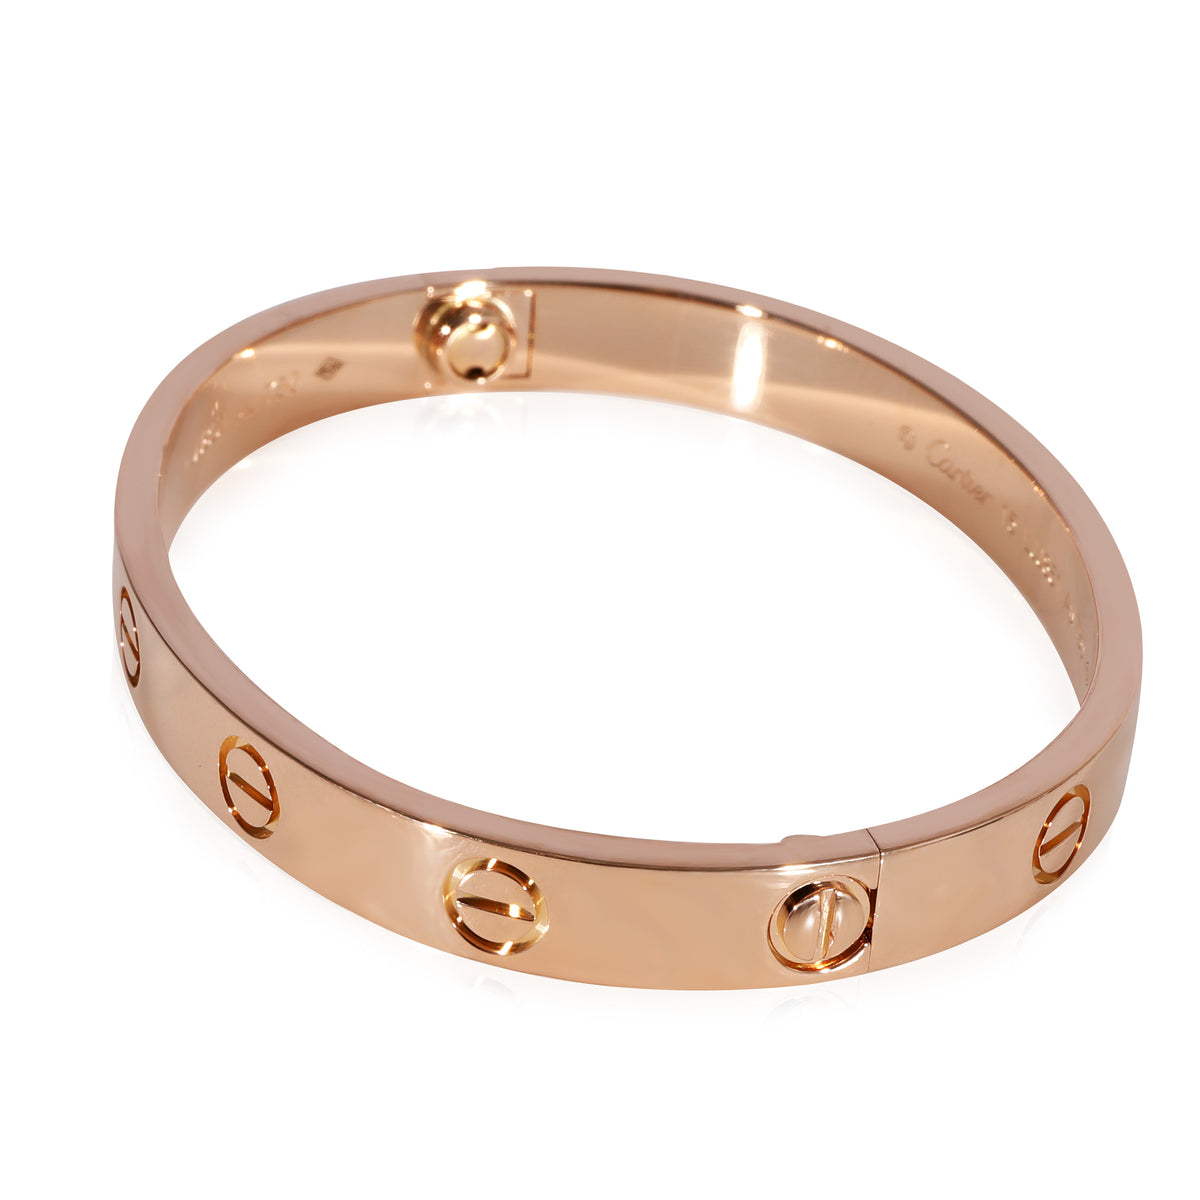 Cartier Love Bracelet in 18k Rose Gold